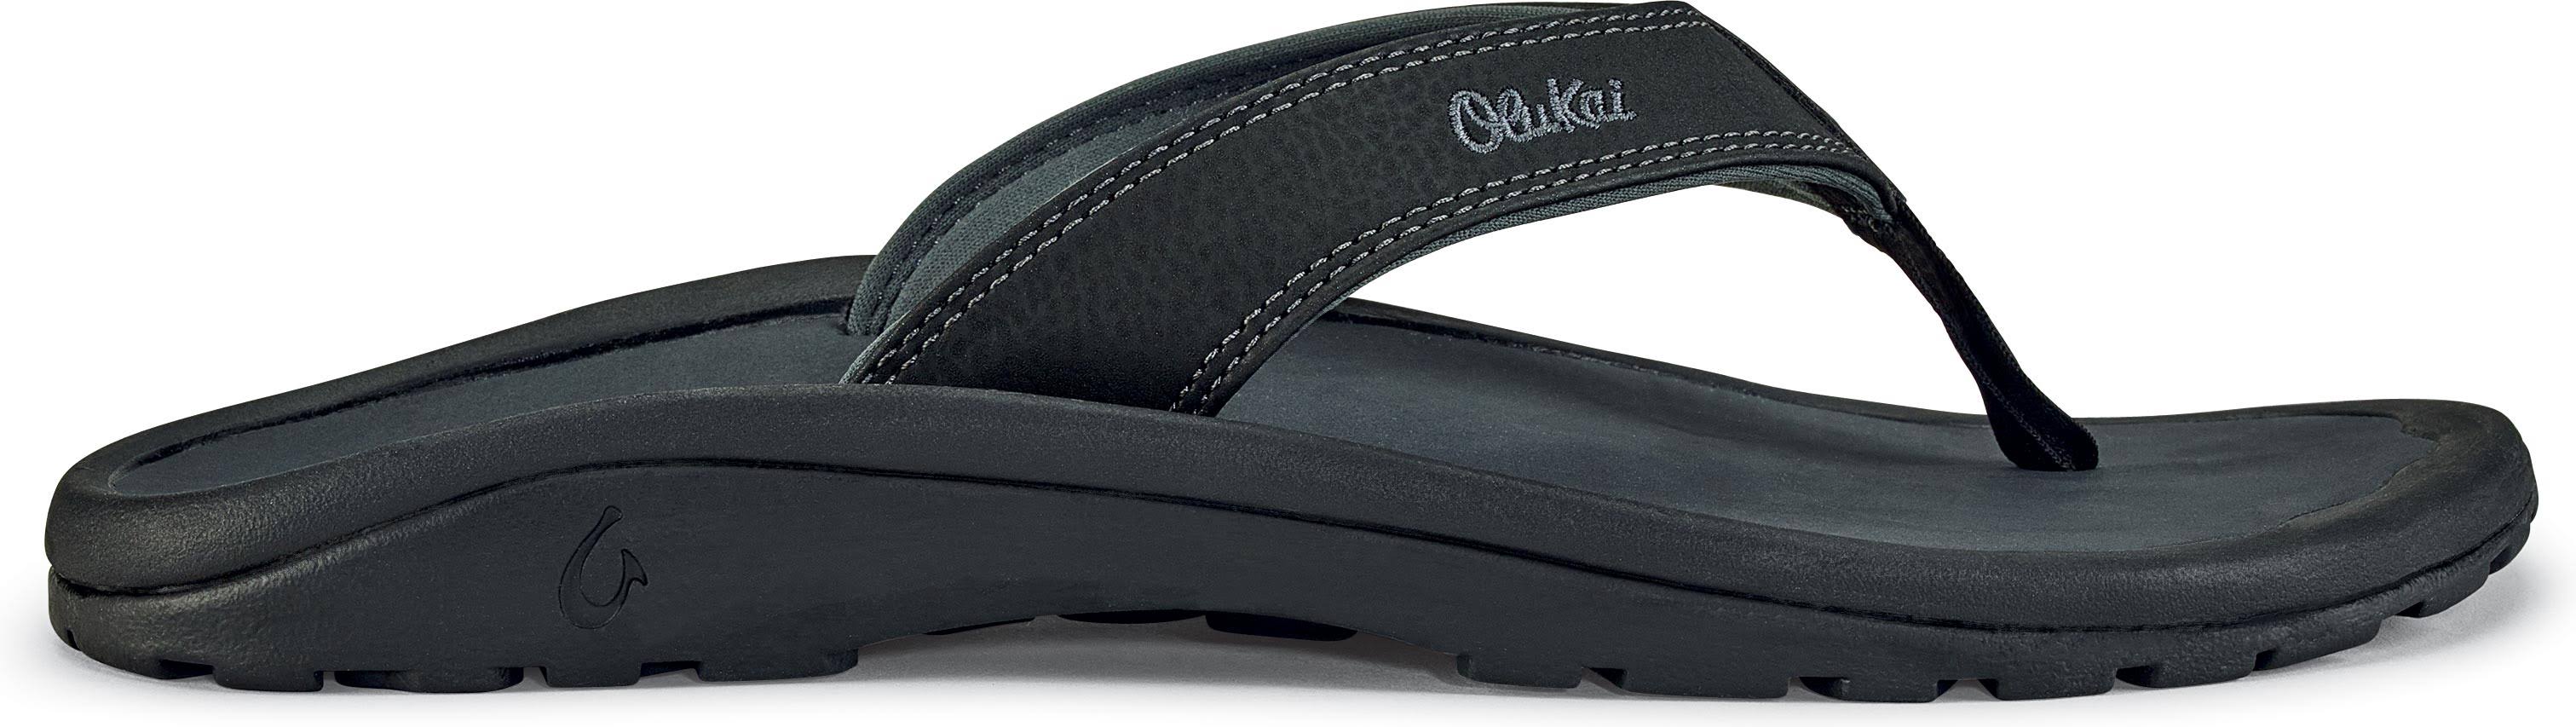 OluKai Men's Ohana Sandal - Black/Dark Shadow, 9 US